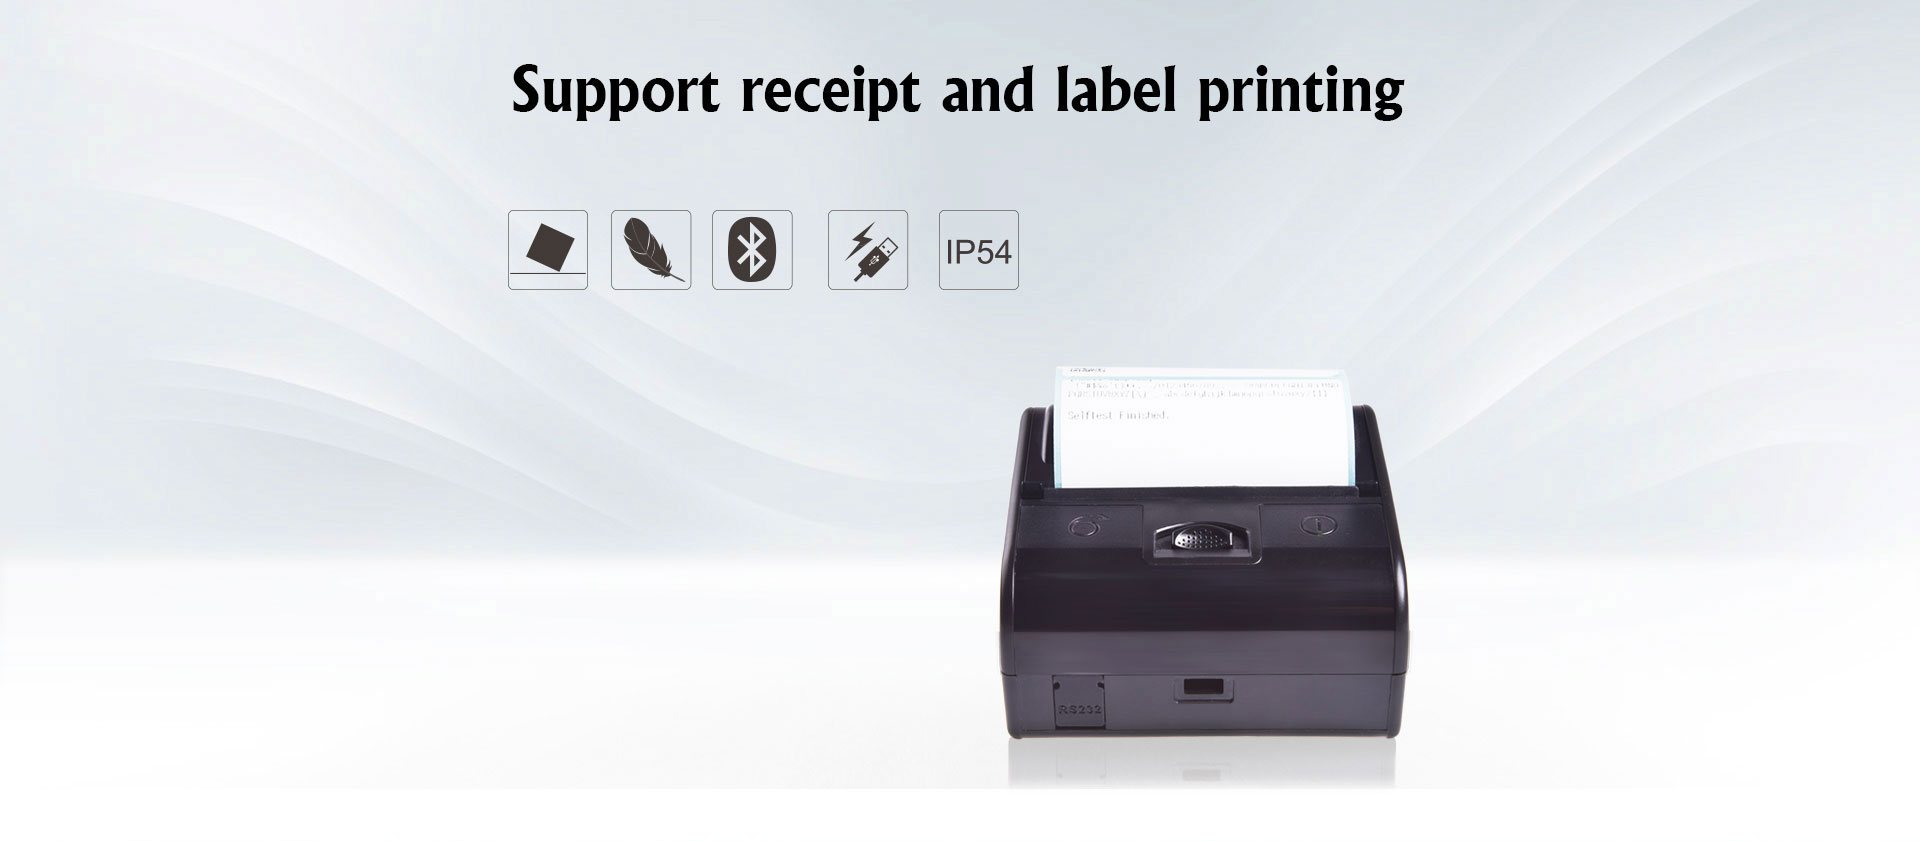 HPRT mobile receipt label printer MPT3